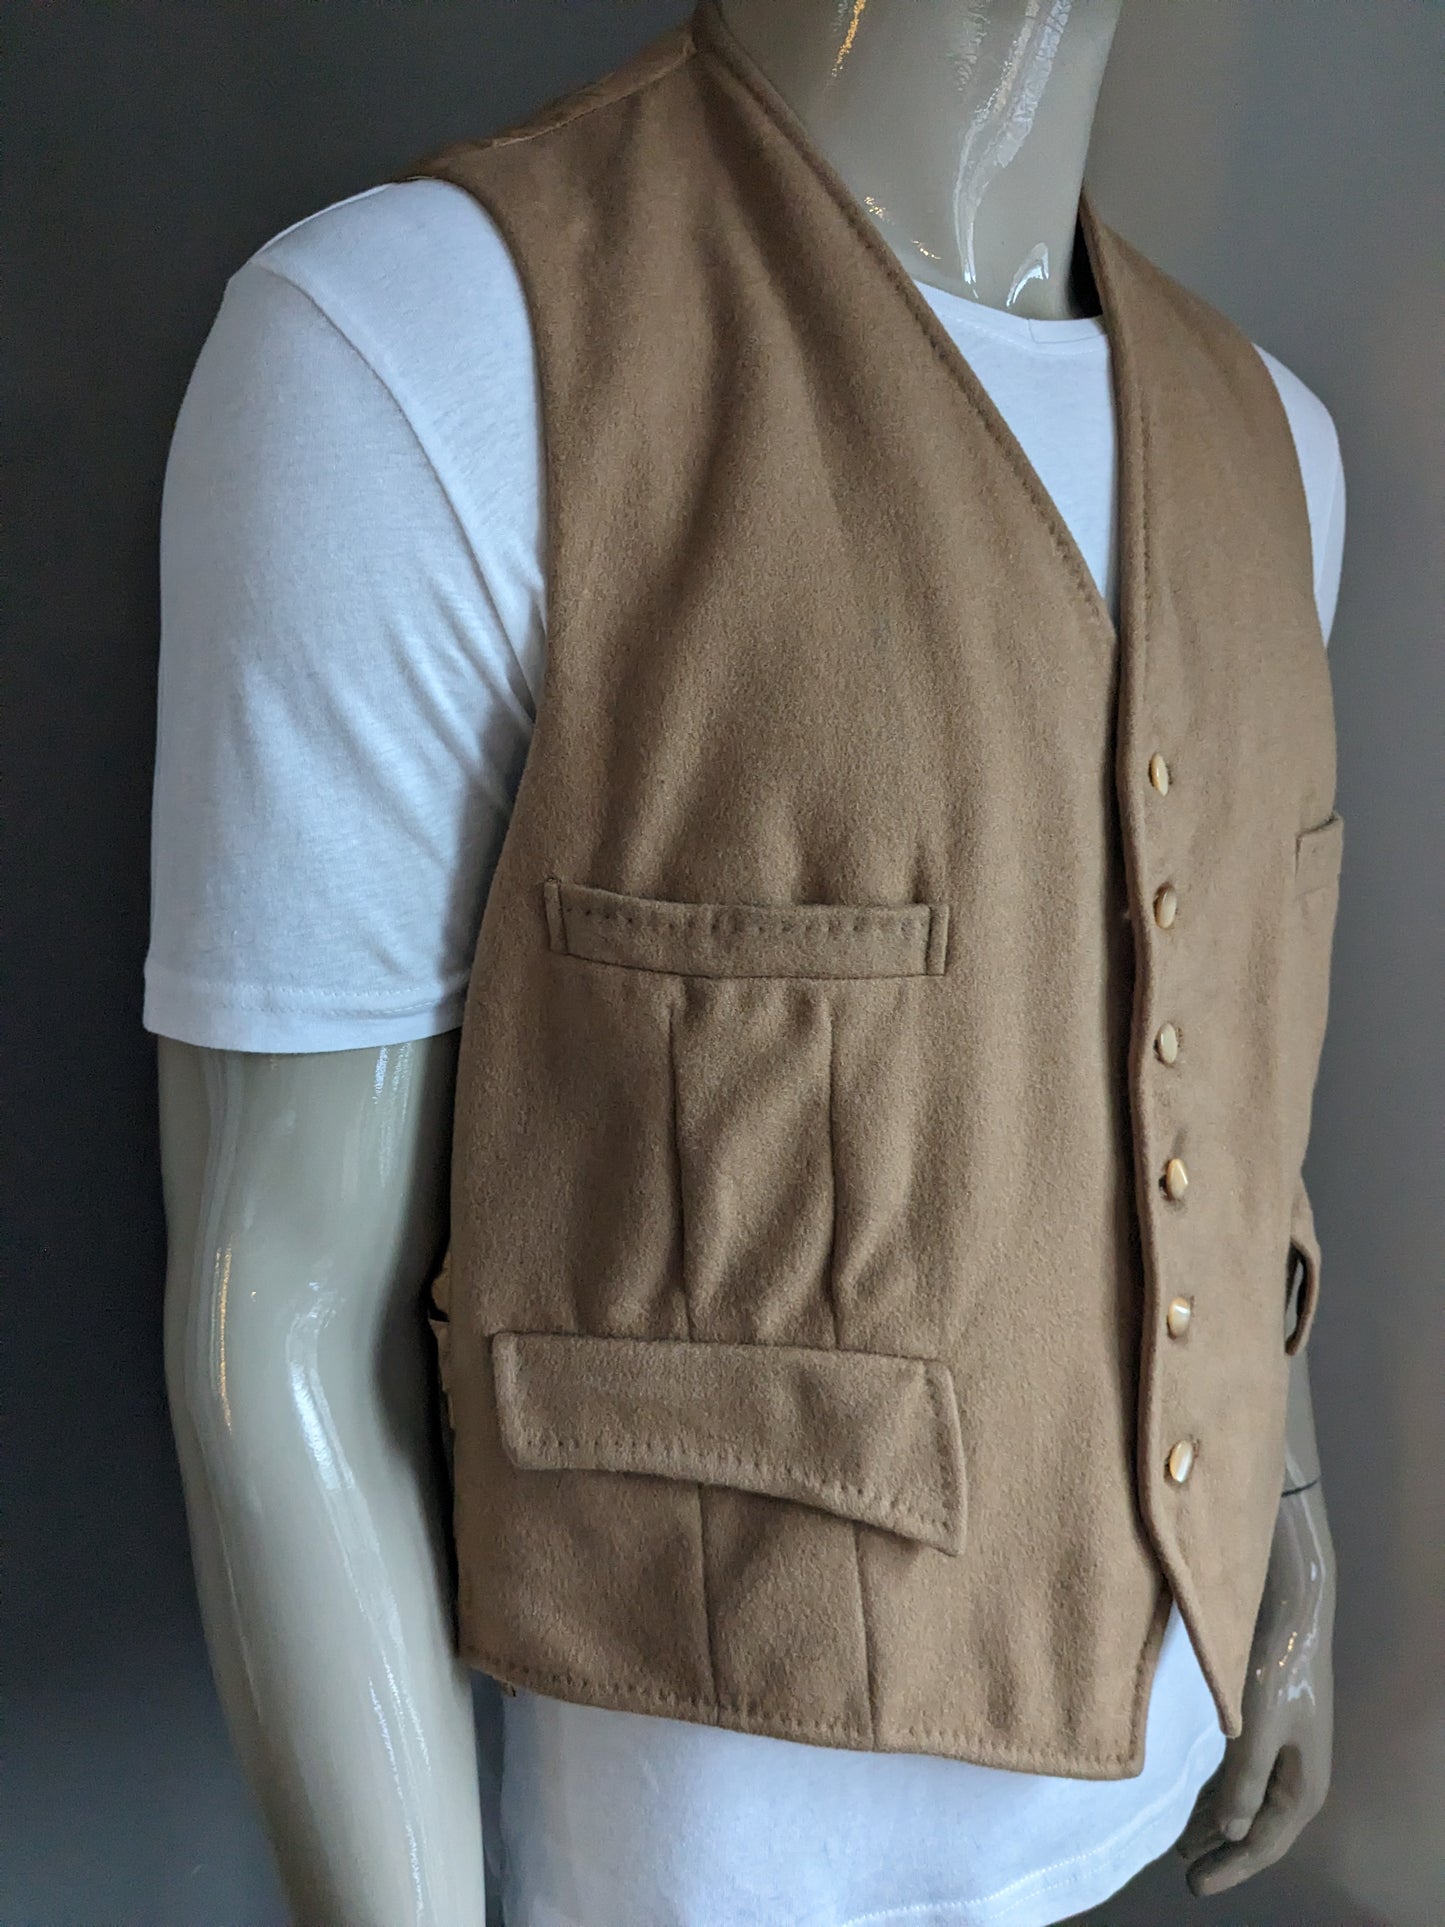 Strachan & Co Ltd Woolen Gilet. Camel brown colored. Size XL.